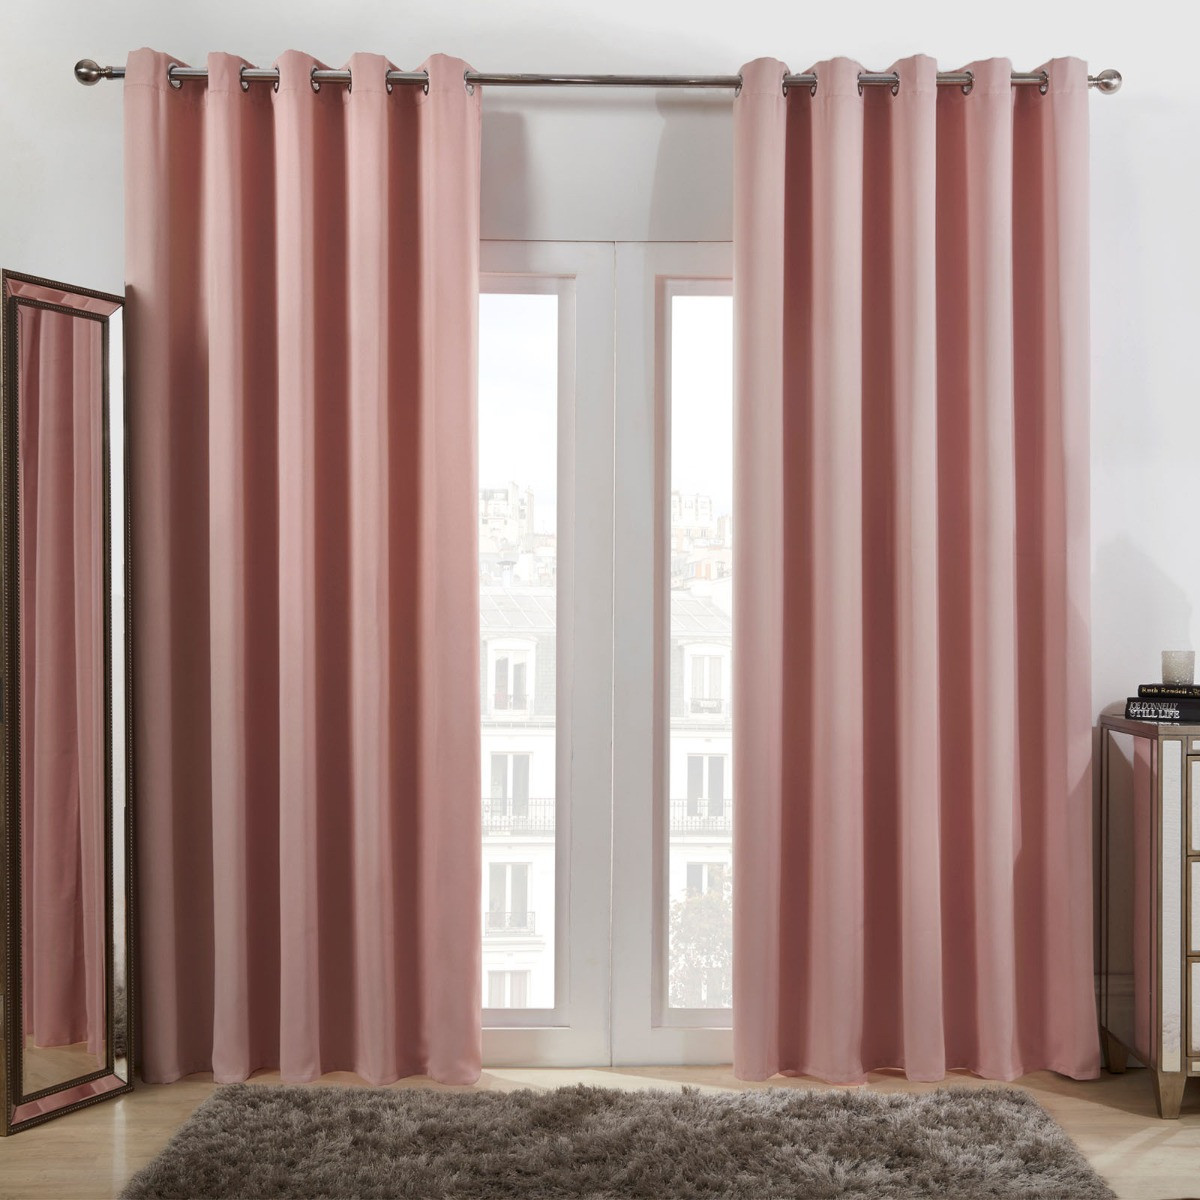 Dreamscene Eyelet Blackout Curtains - Blush Pink, 46" x 54">